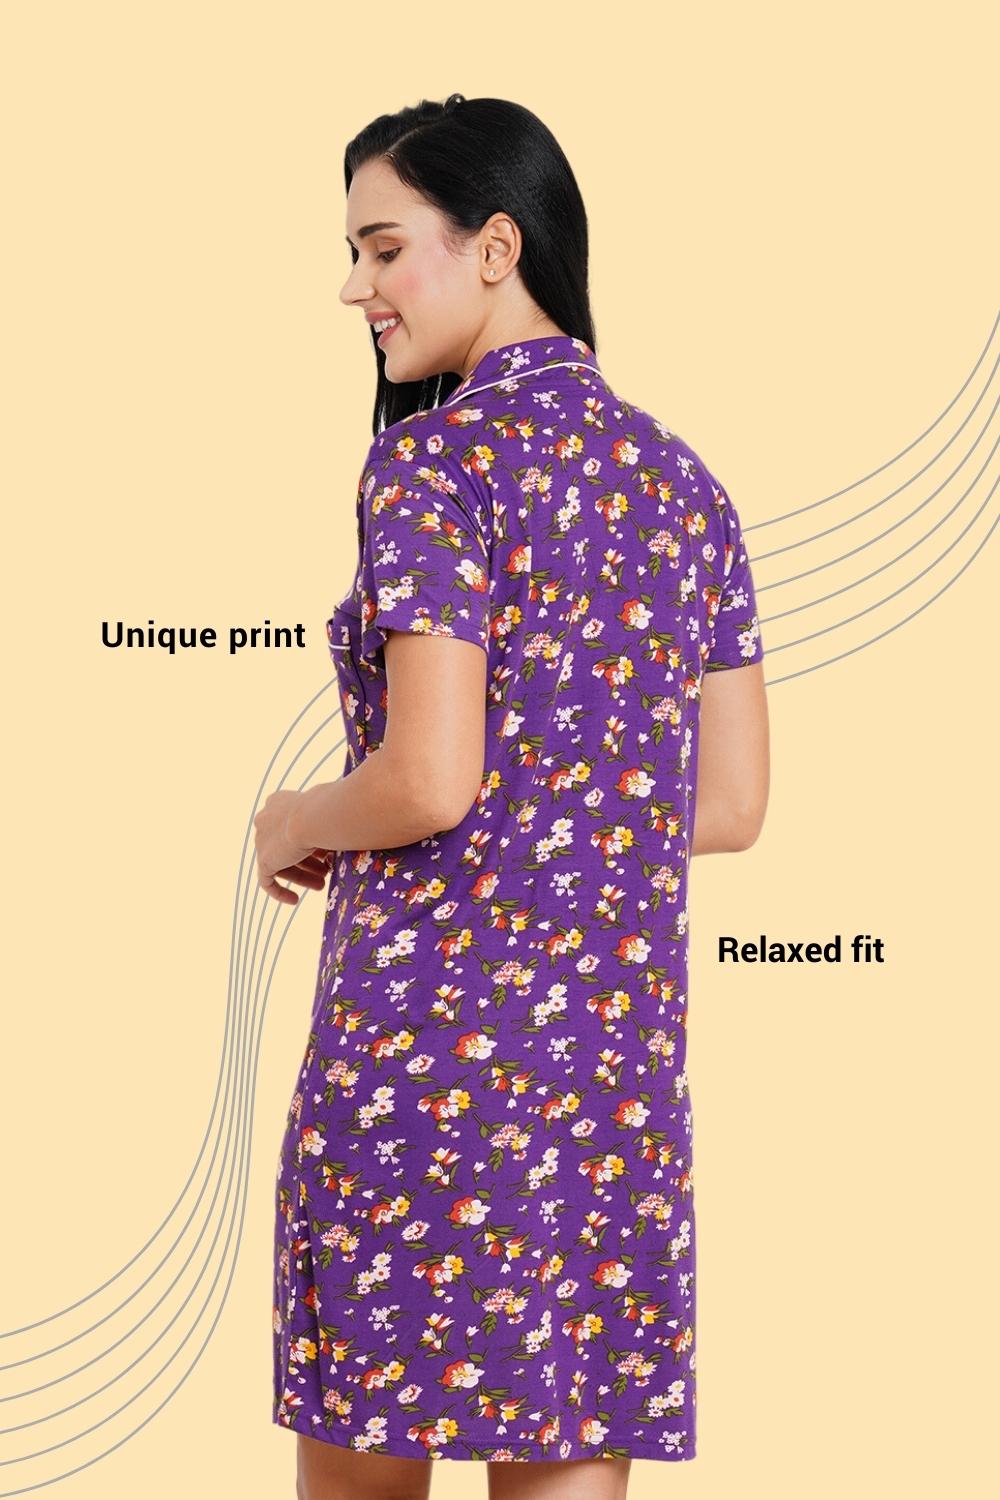 Organic Cotton and Bamboo fibre sleep shirt with an eye mask_ISL025-Acai floral print